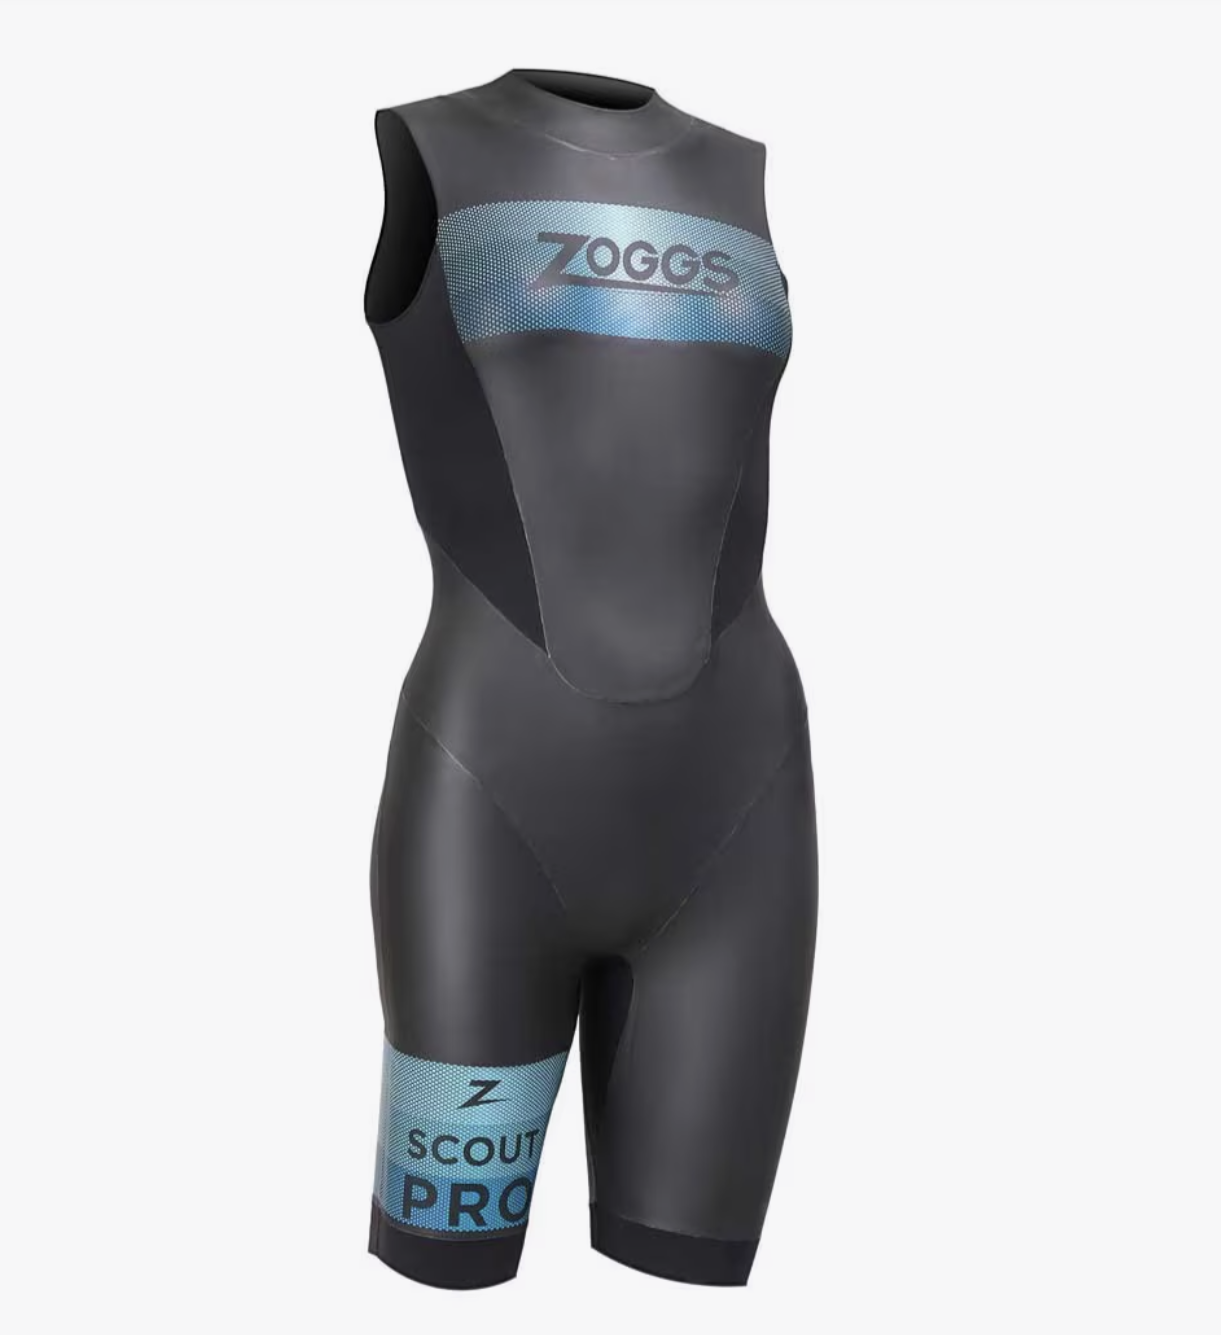 ZOGGS SCOUT Pro Shorty Woman חליפת שחייה וספורט ימי ללא שרוולים לנשים